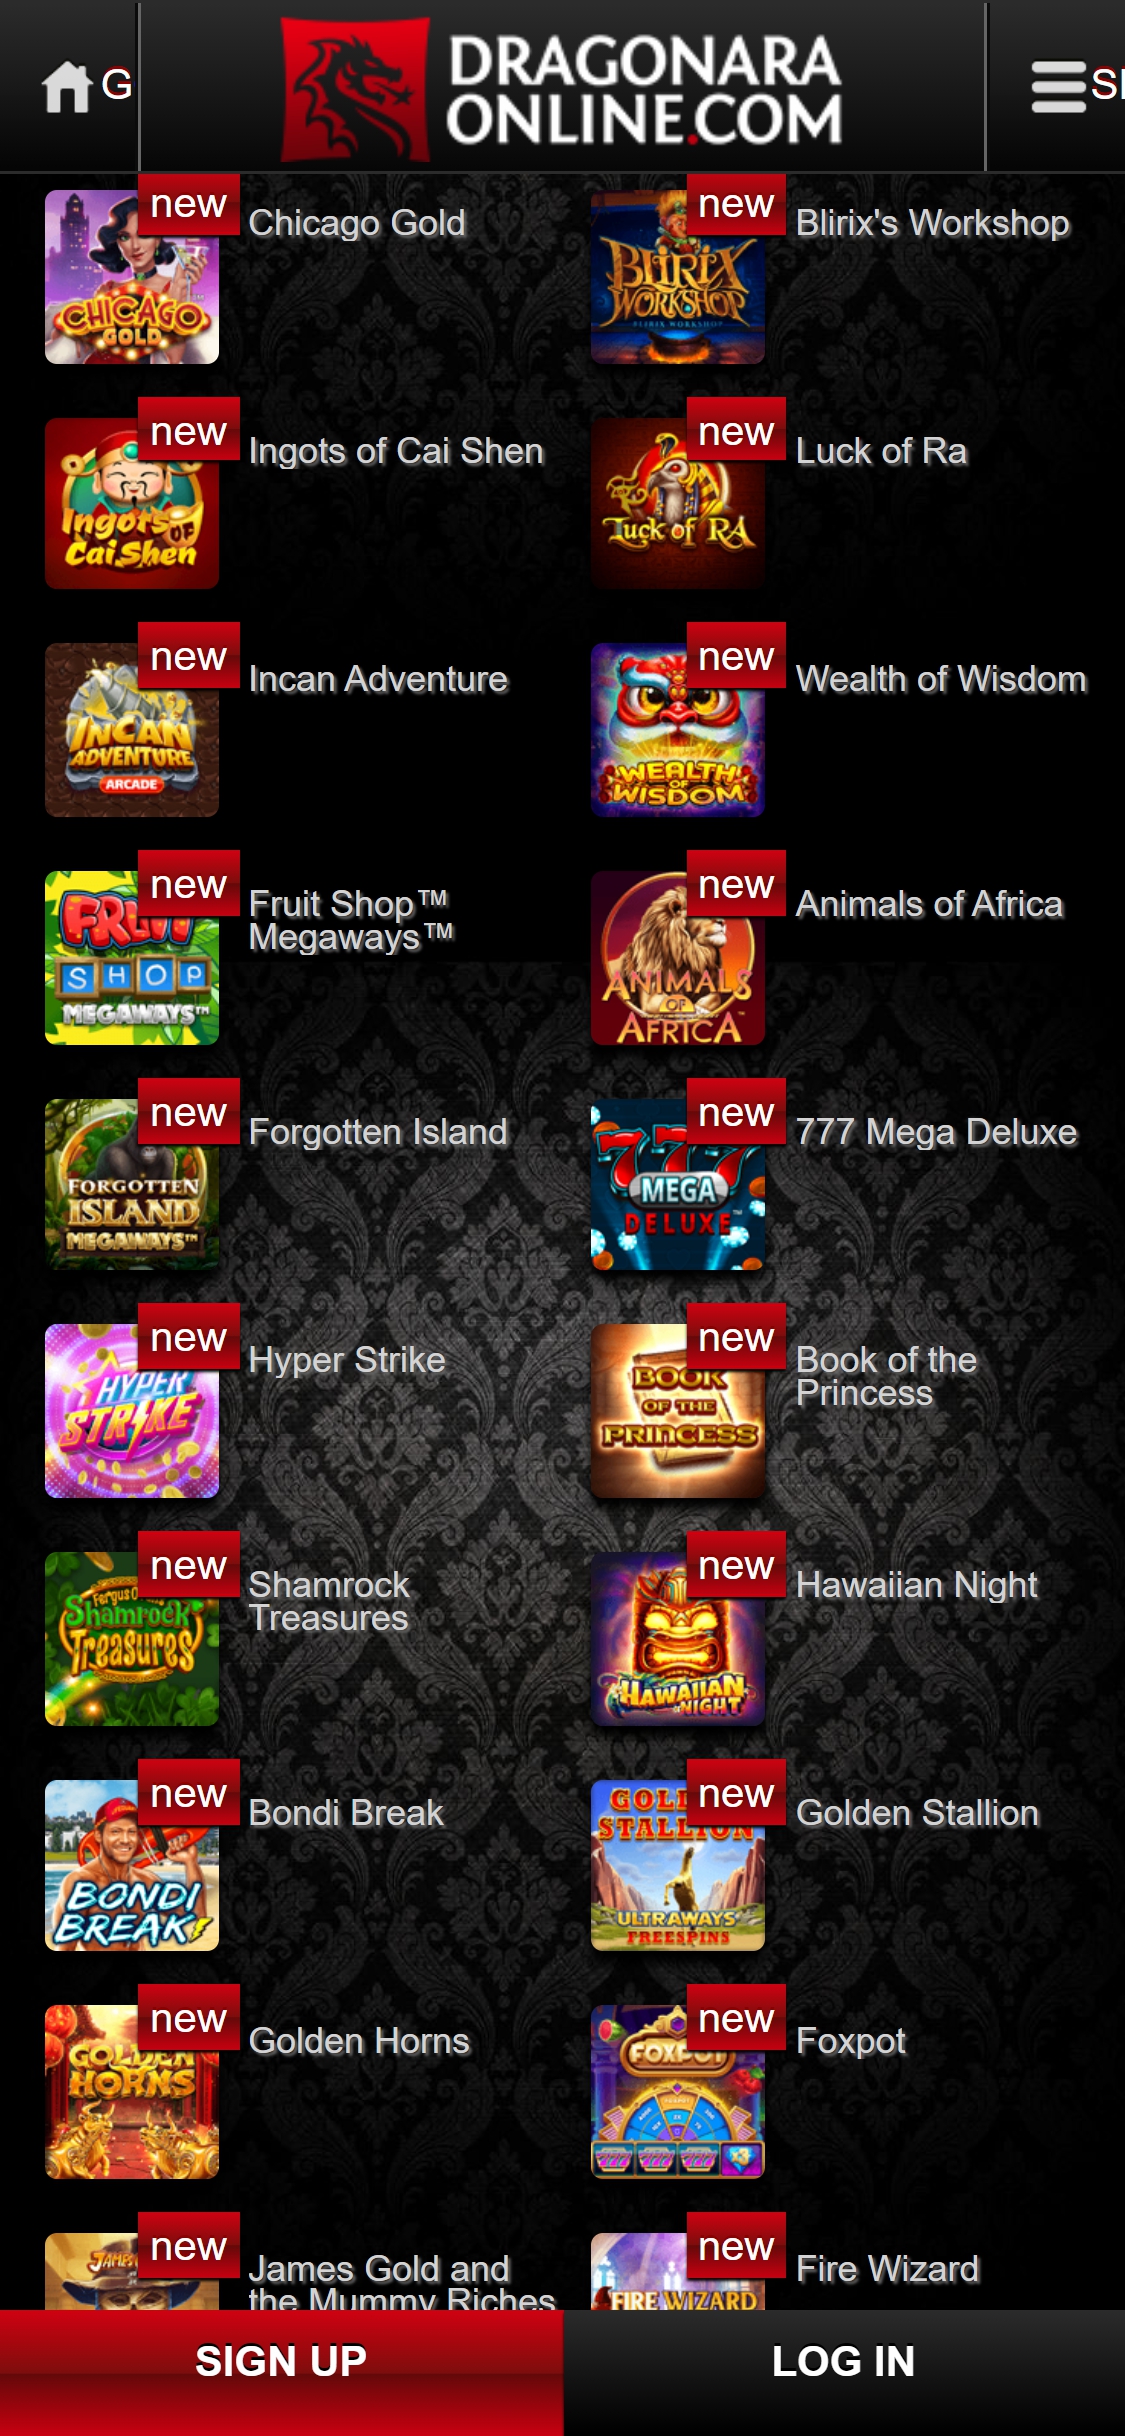 Dragonara Casino Mobile Games Review